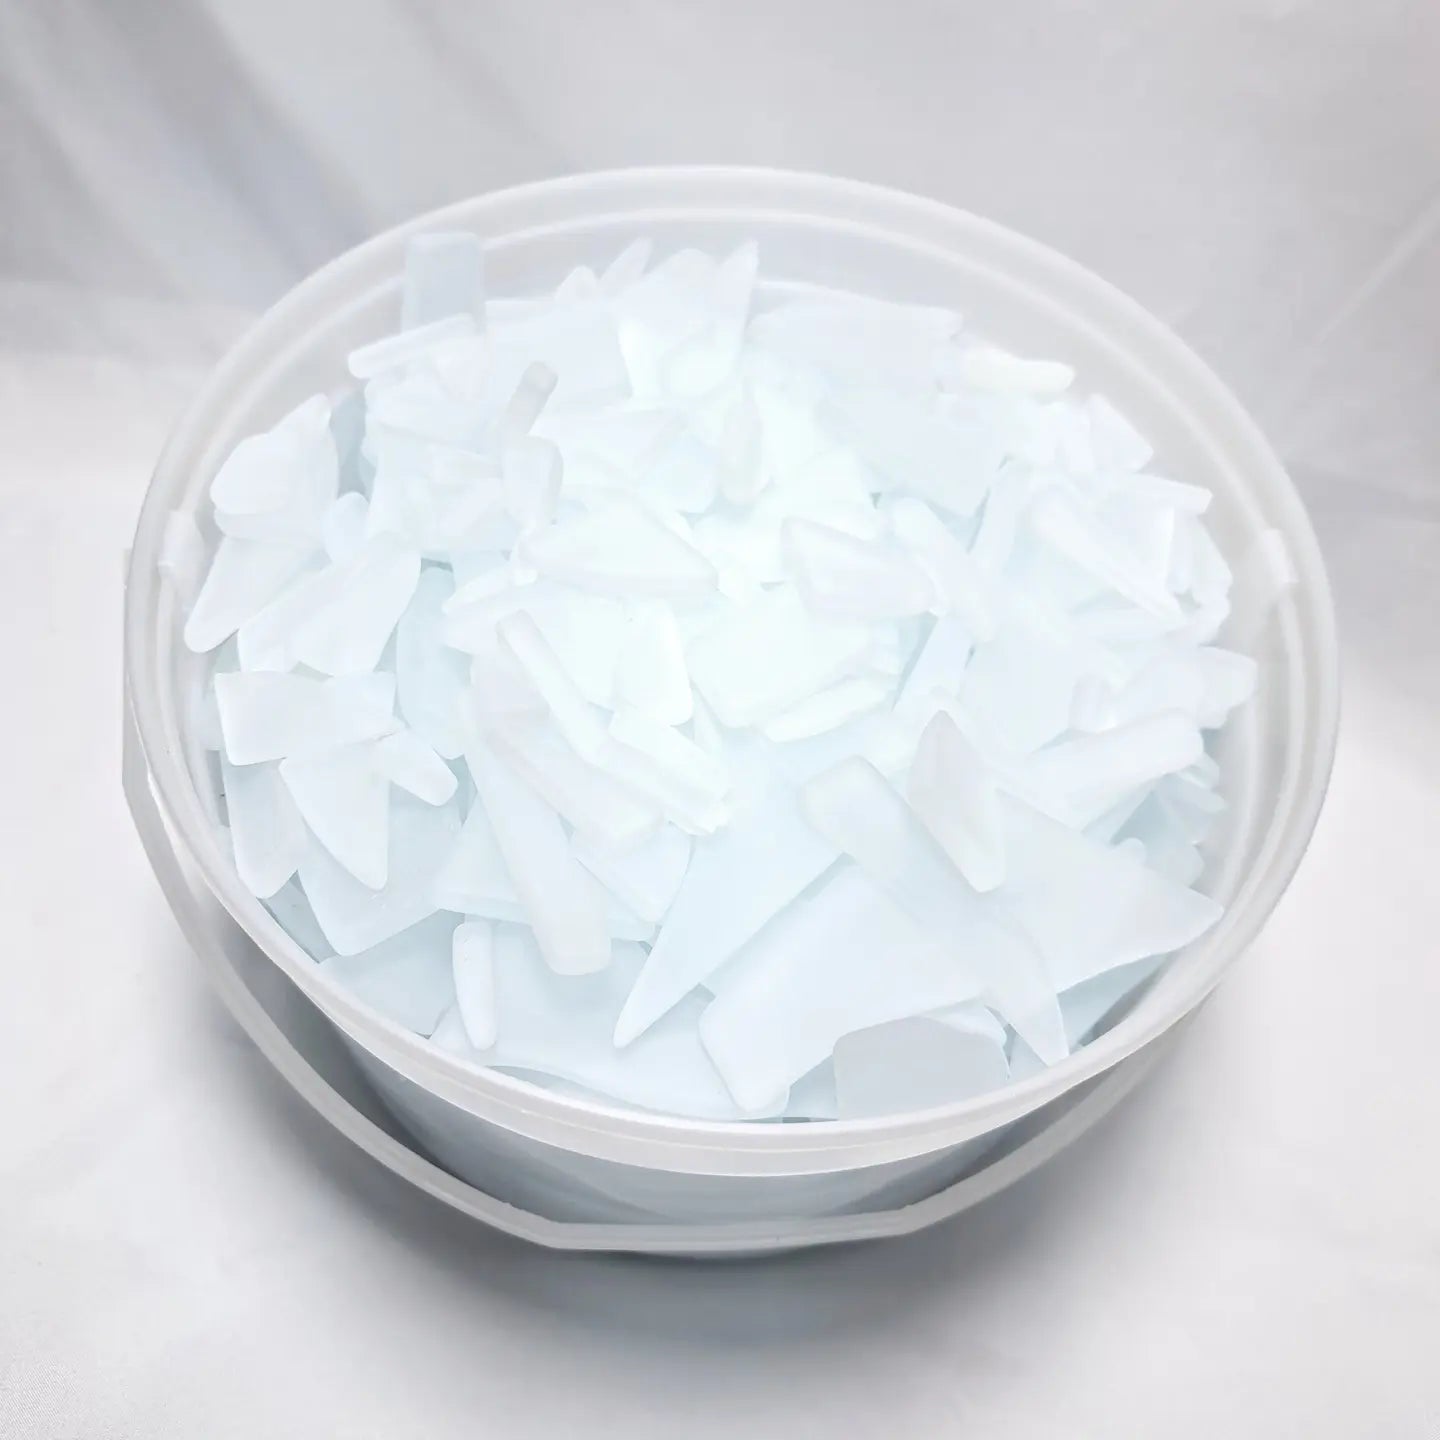 10 Pounds of Sea Glass - White